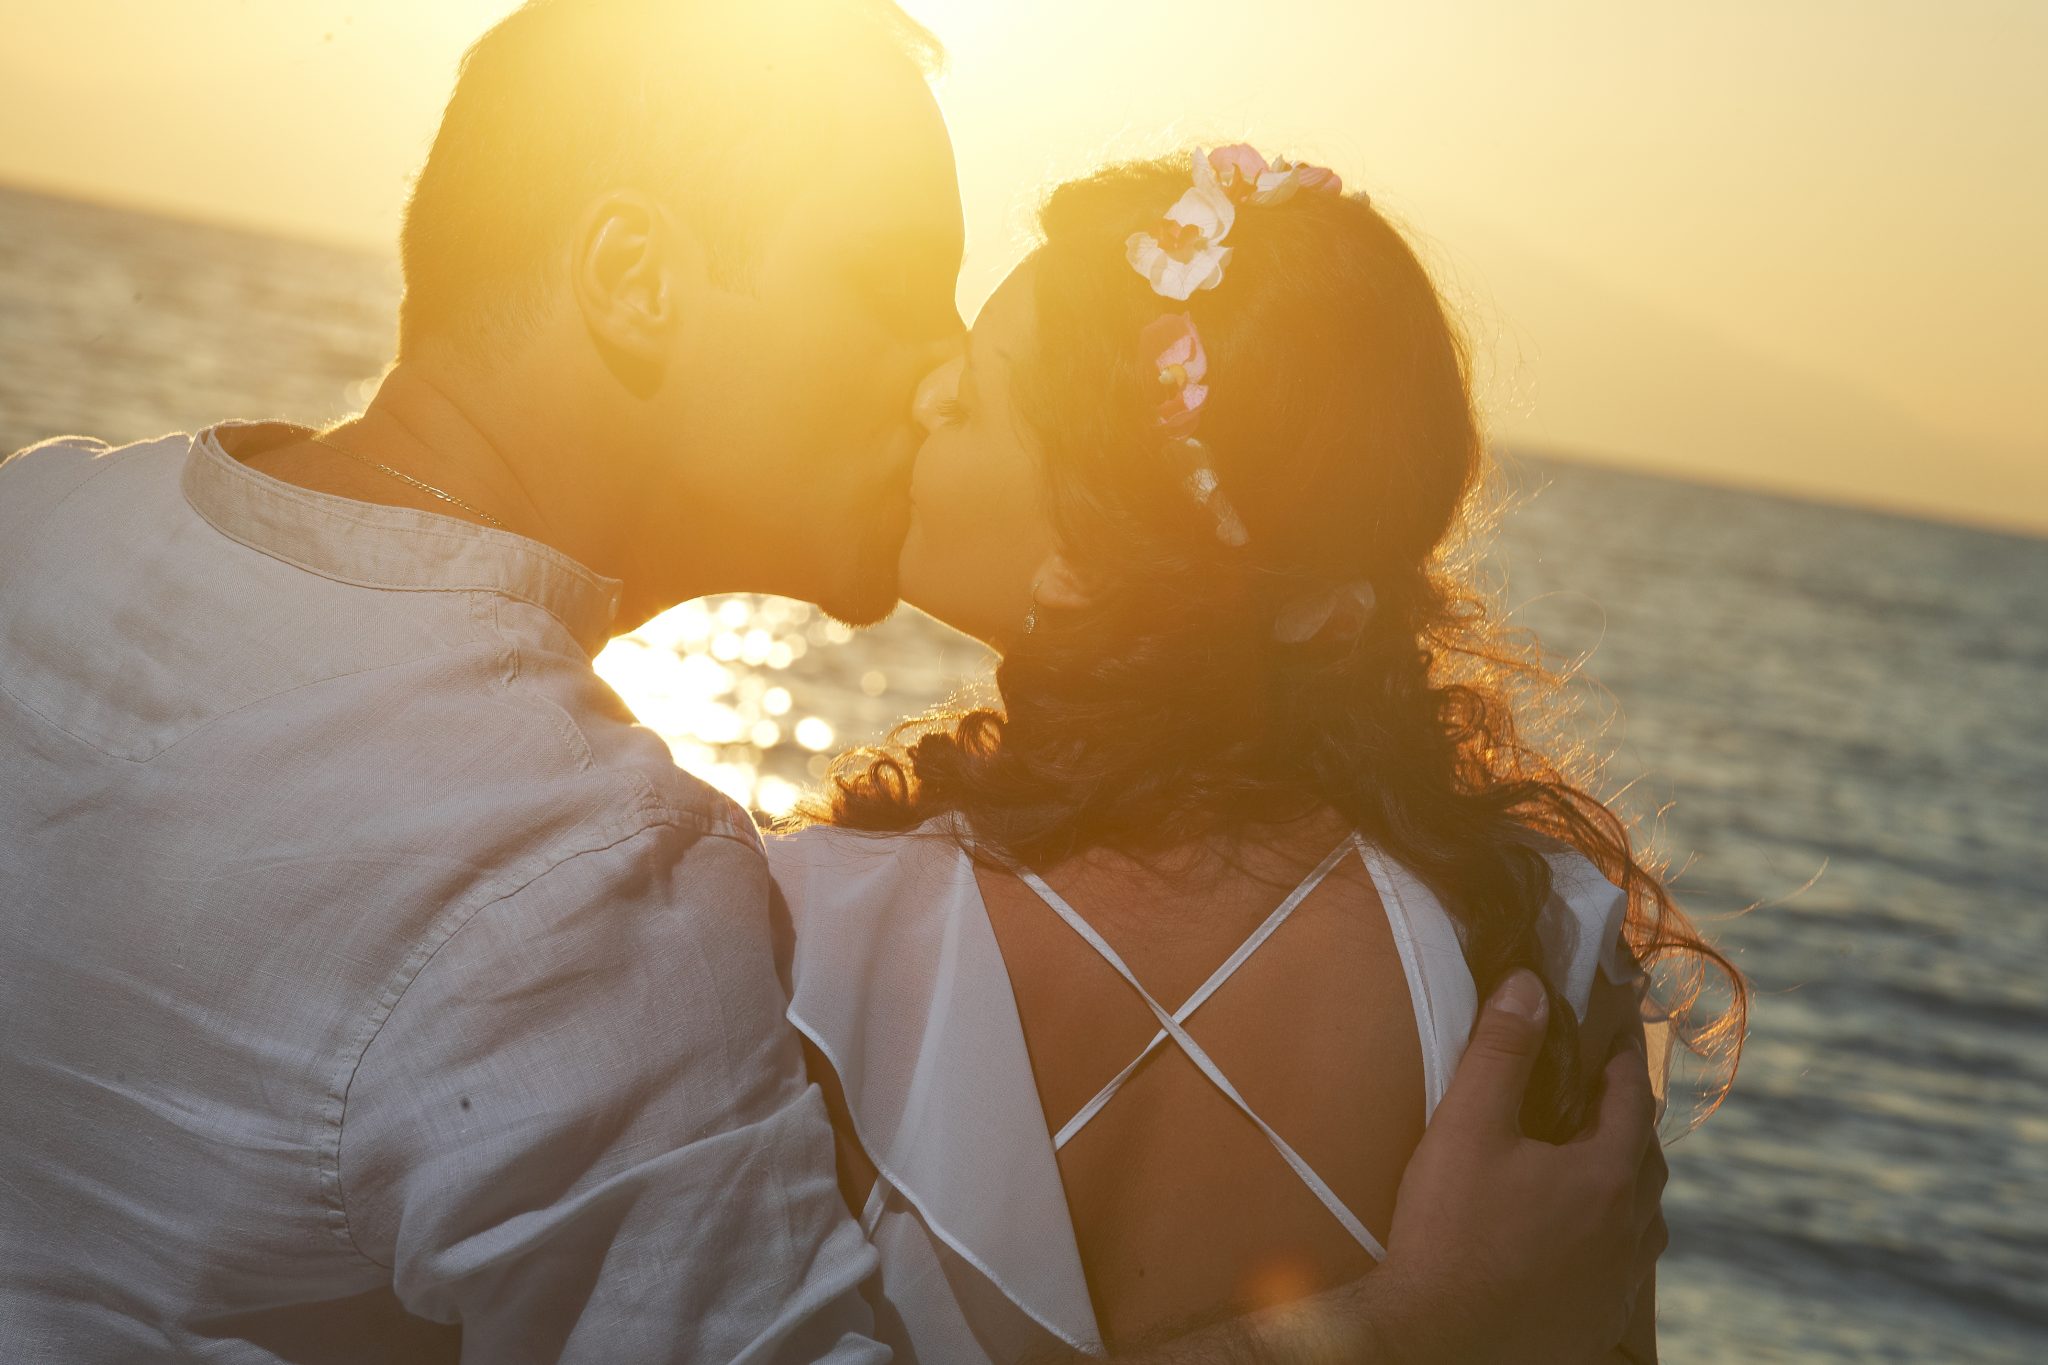 Halkidiki Wedding Photographer Dream Wedding in Greece Beach Wedding